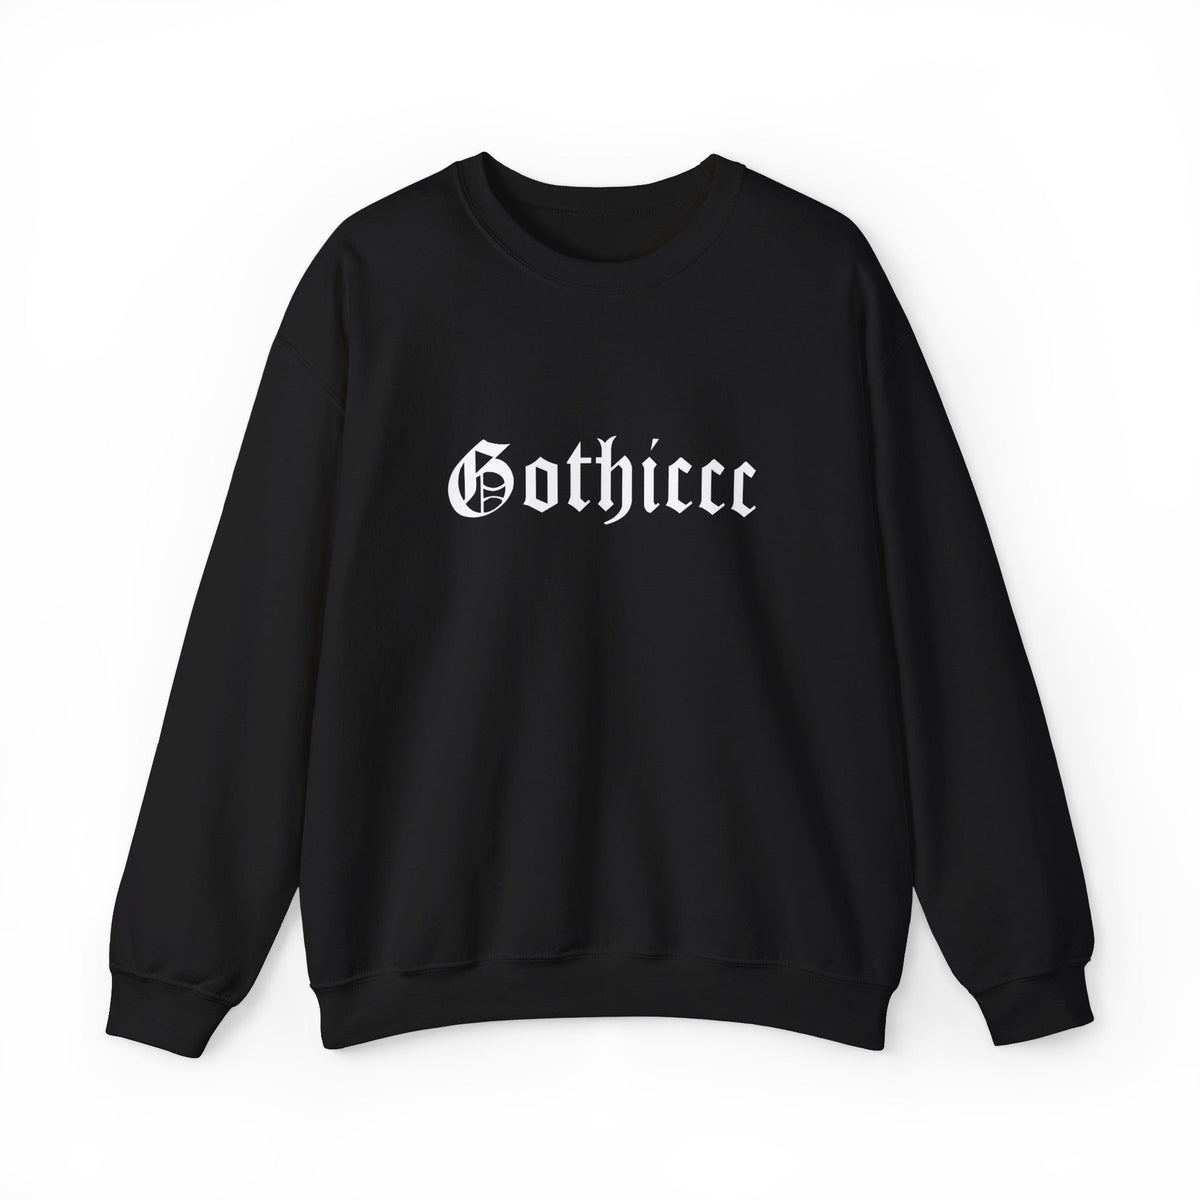 Gothiccc Long Sleeve Crew Neck Sweatshirt - Goth Cloth Co.Sweatshirt16935238291932755884